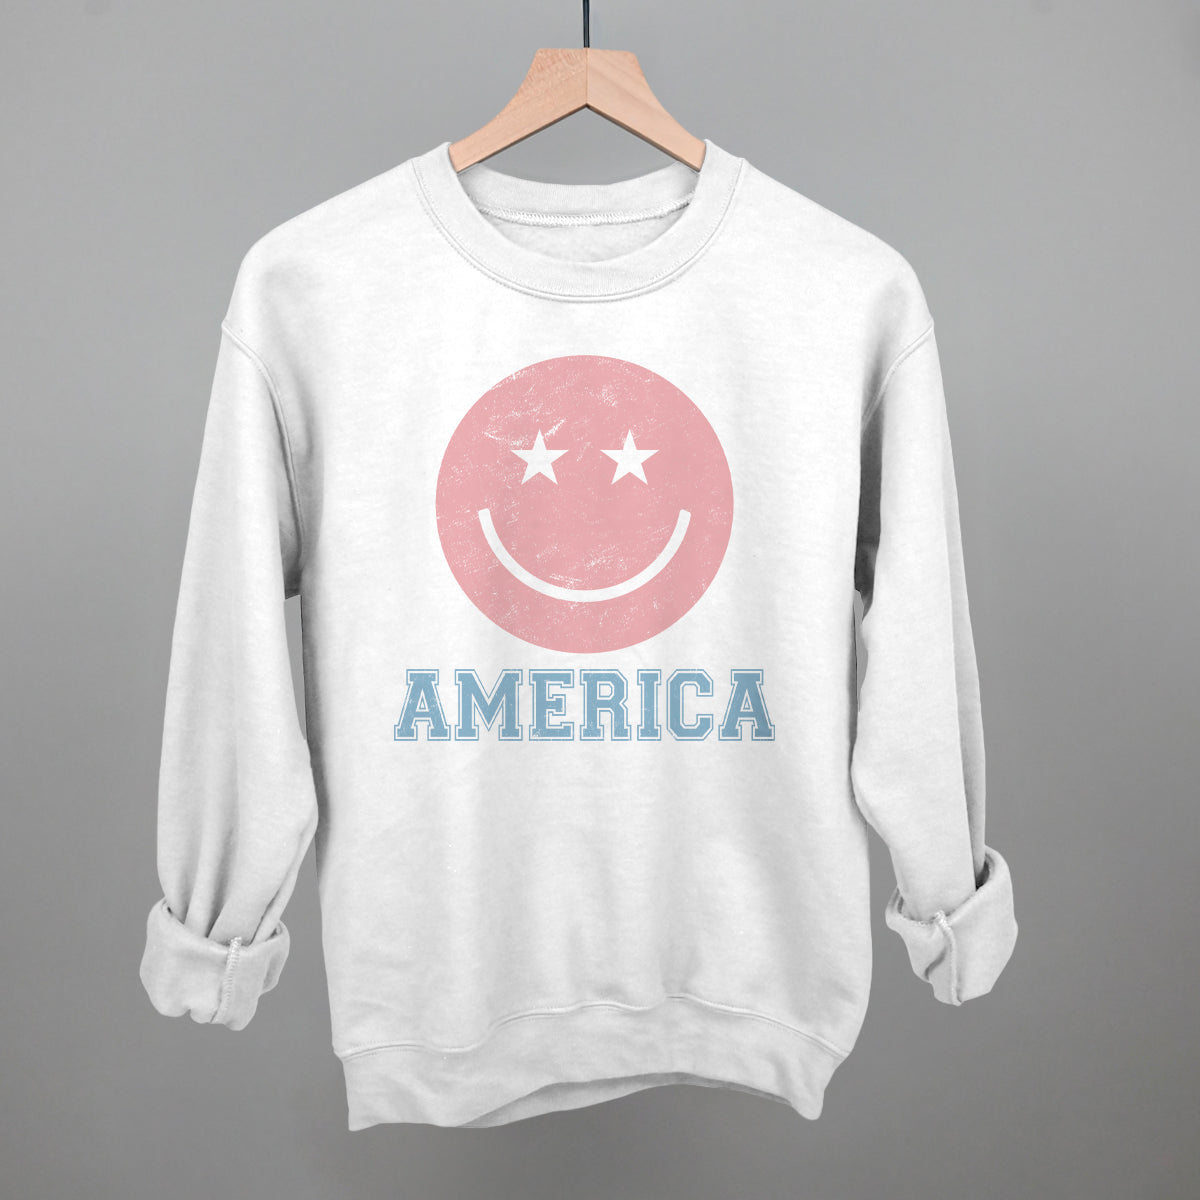 America (Smiley Face)